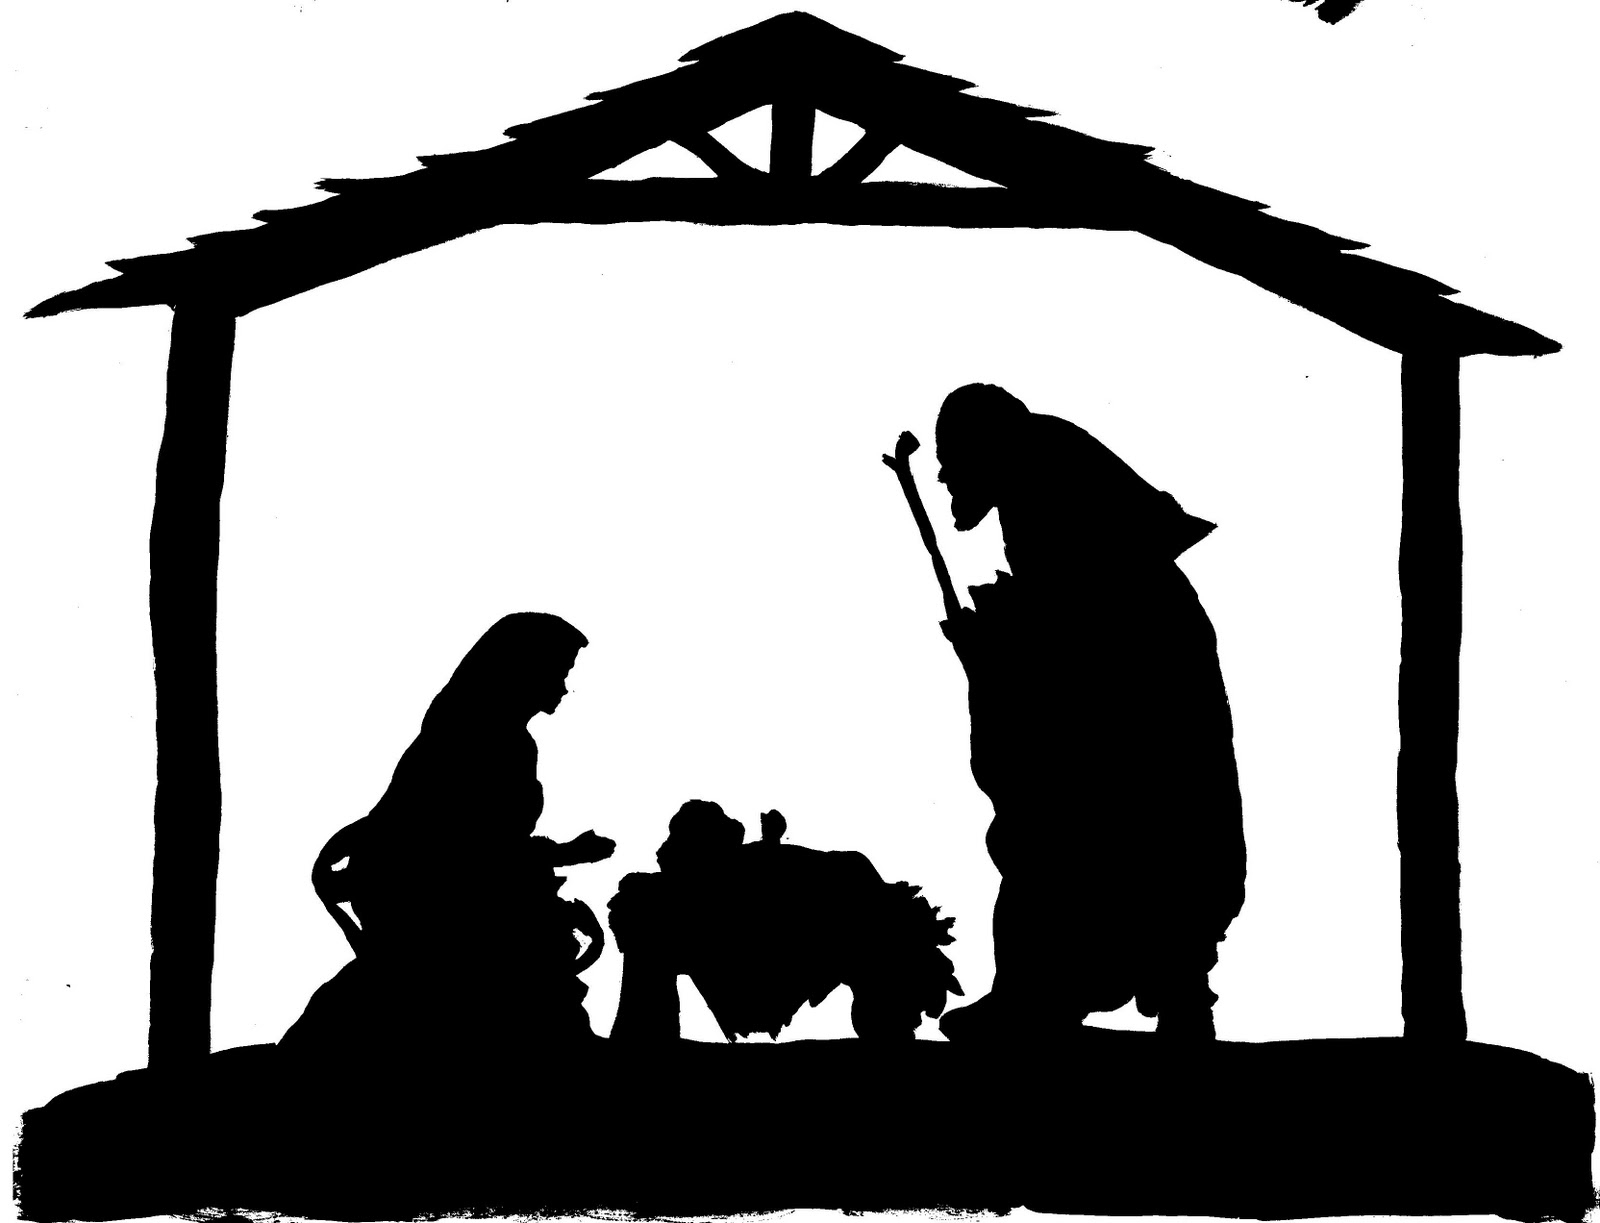 Free Printable Nativity Silhouette Free Printable